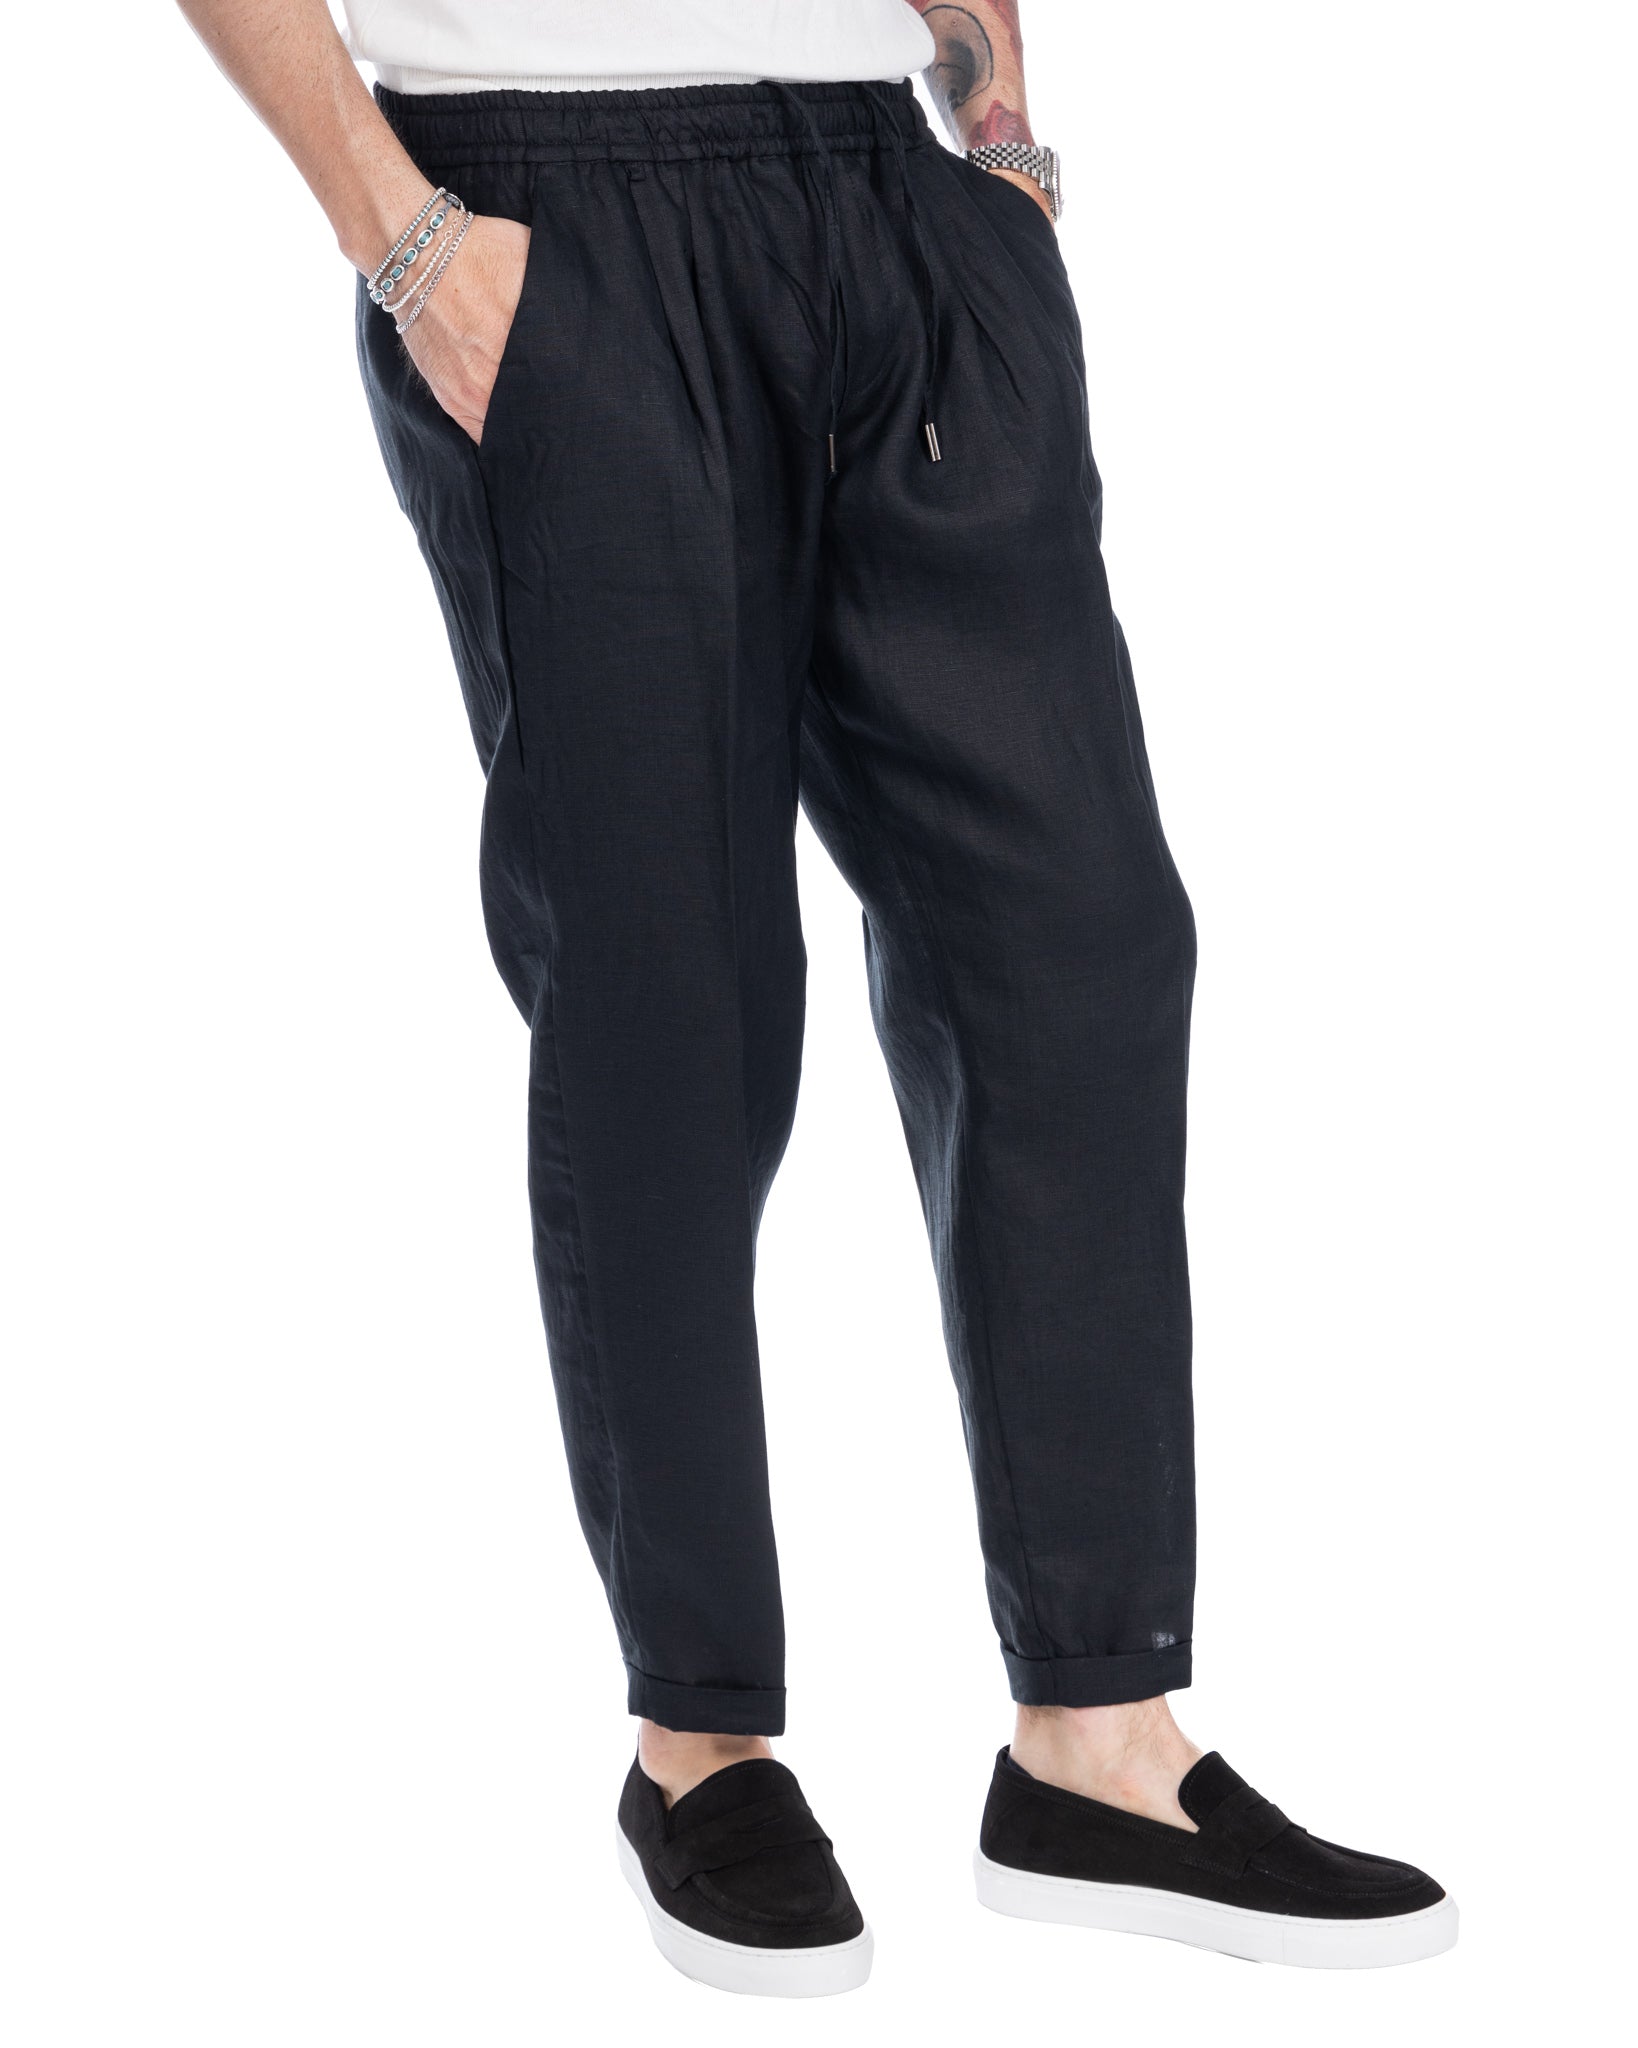 Colin - trousers in pure black linen